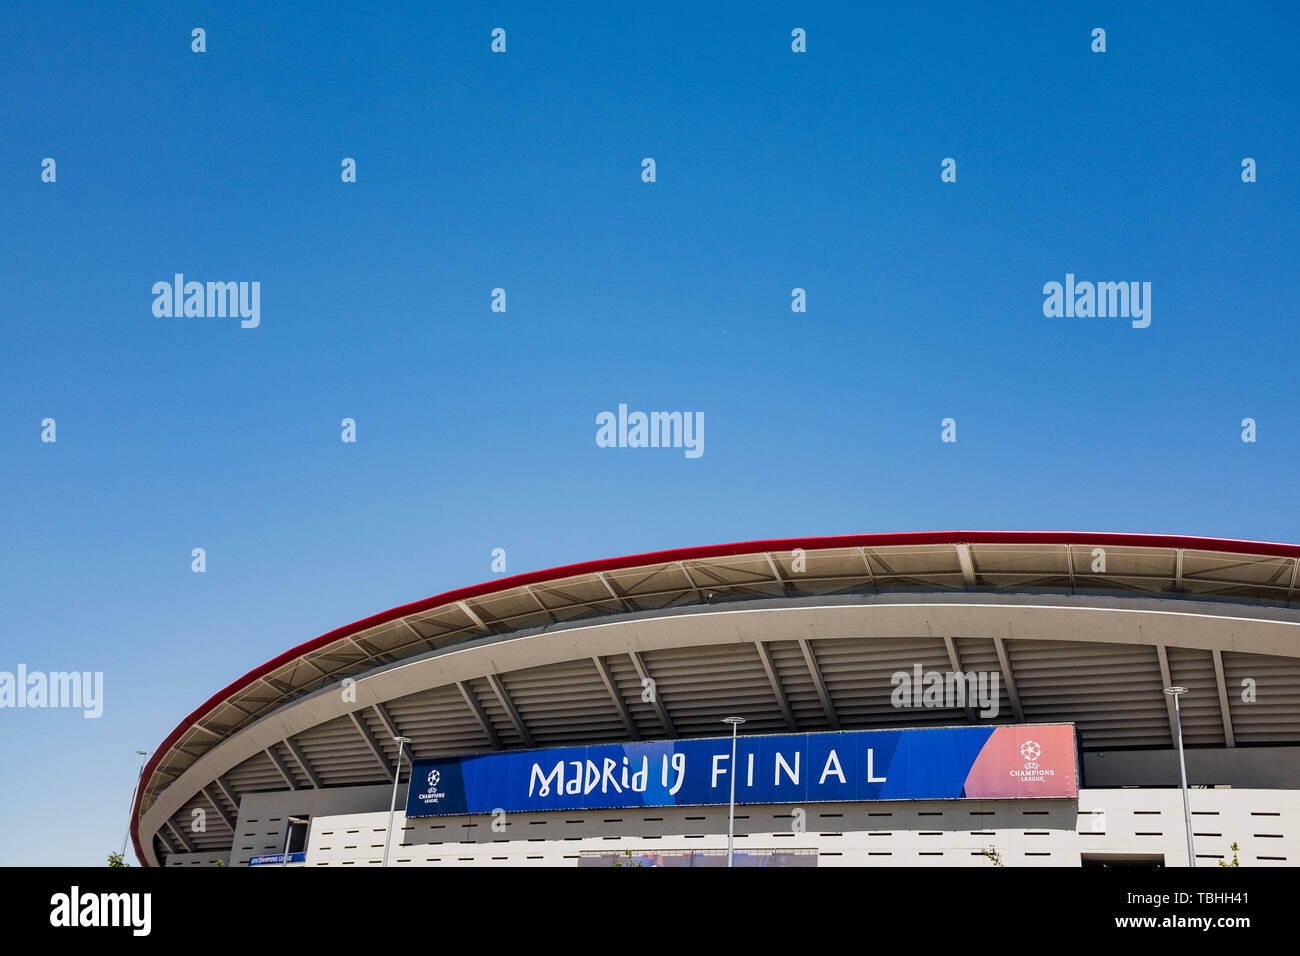 Wanda Metropolitano Stadium before the final of Champions League. Madrid hosts the UEFA Champions League Final between Liverpool and Tottenham Hotspur at the Wanda Metropolitano Stadium. Stock Photo